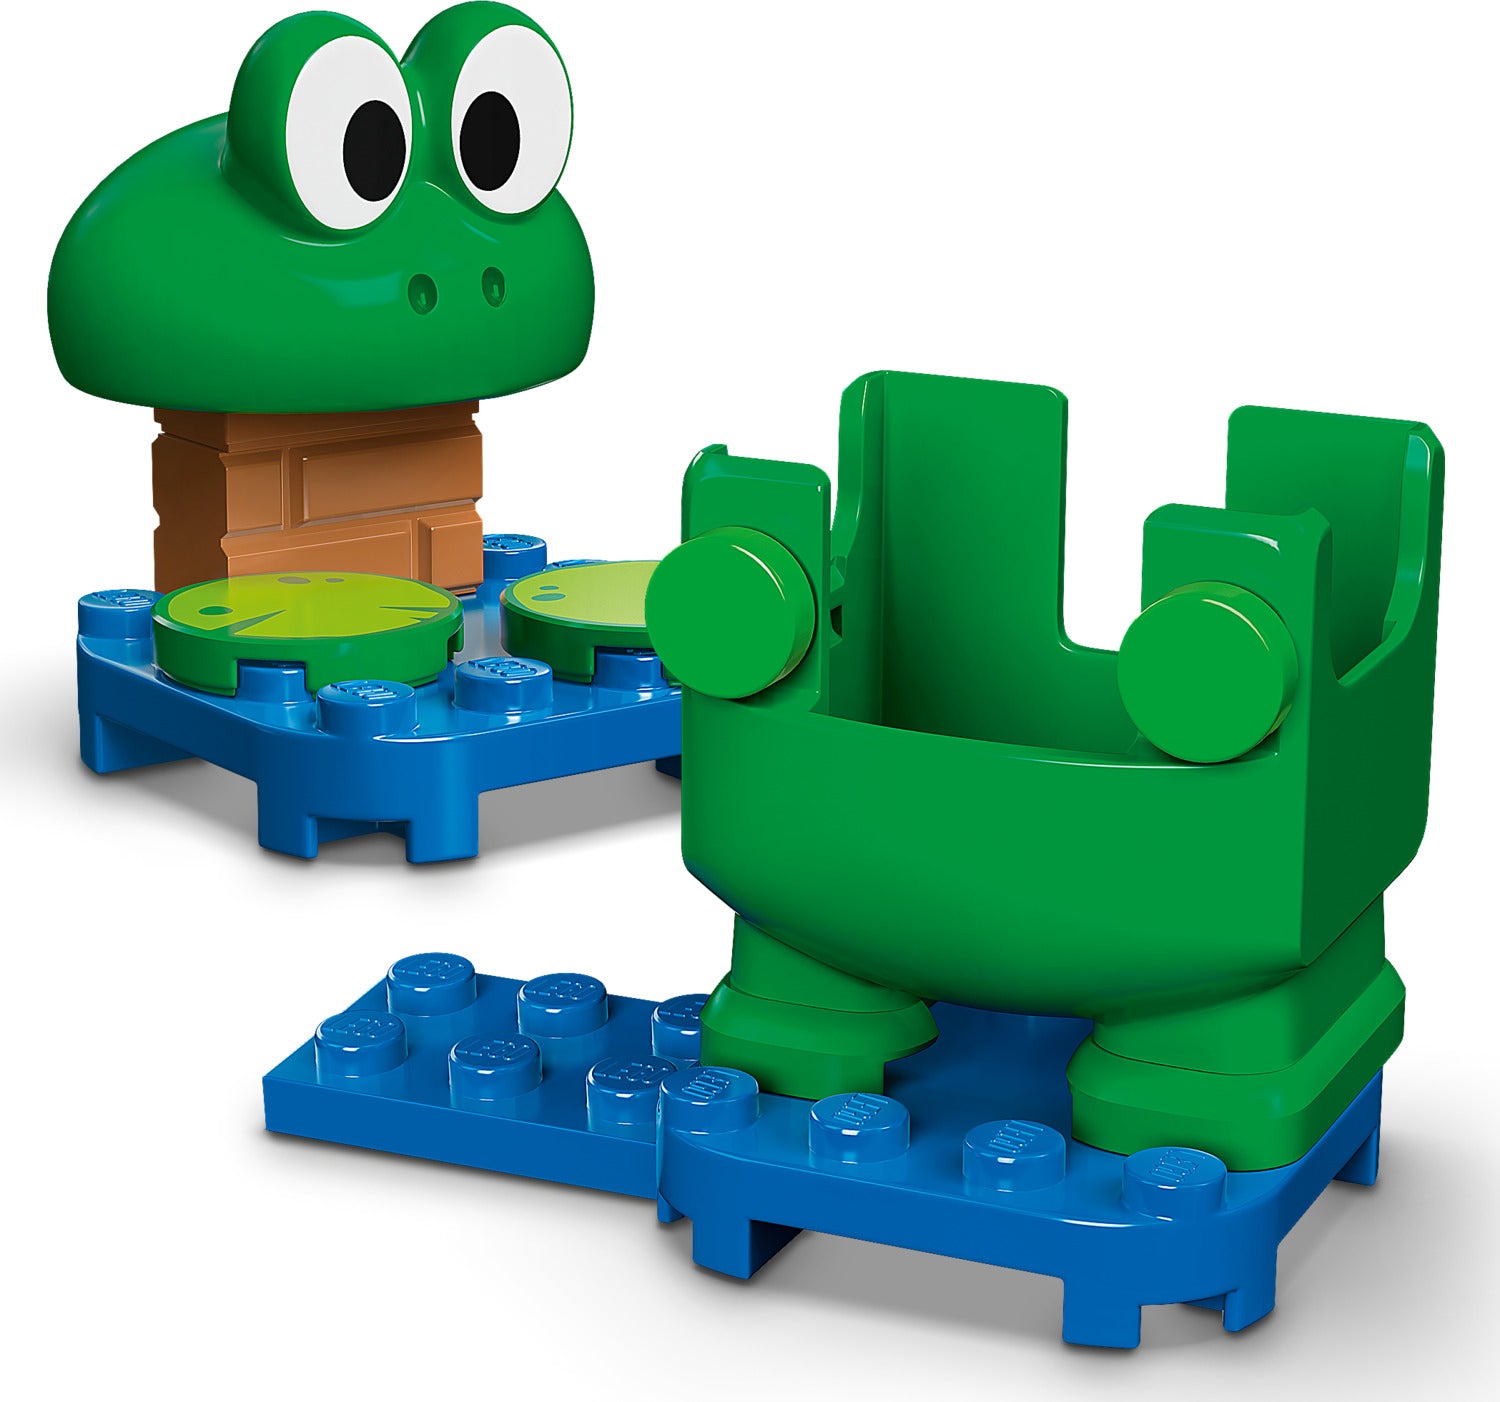 LEGO Super Mario: Frog Mario Power-Up Pack